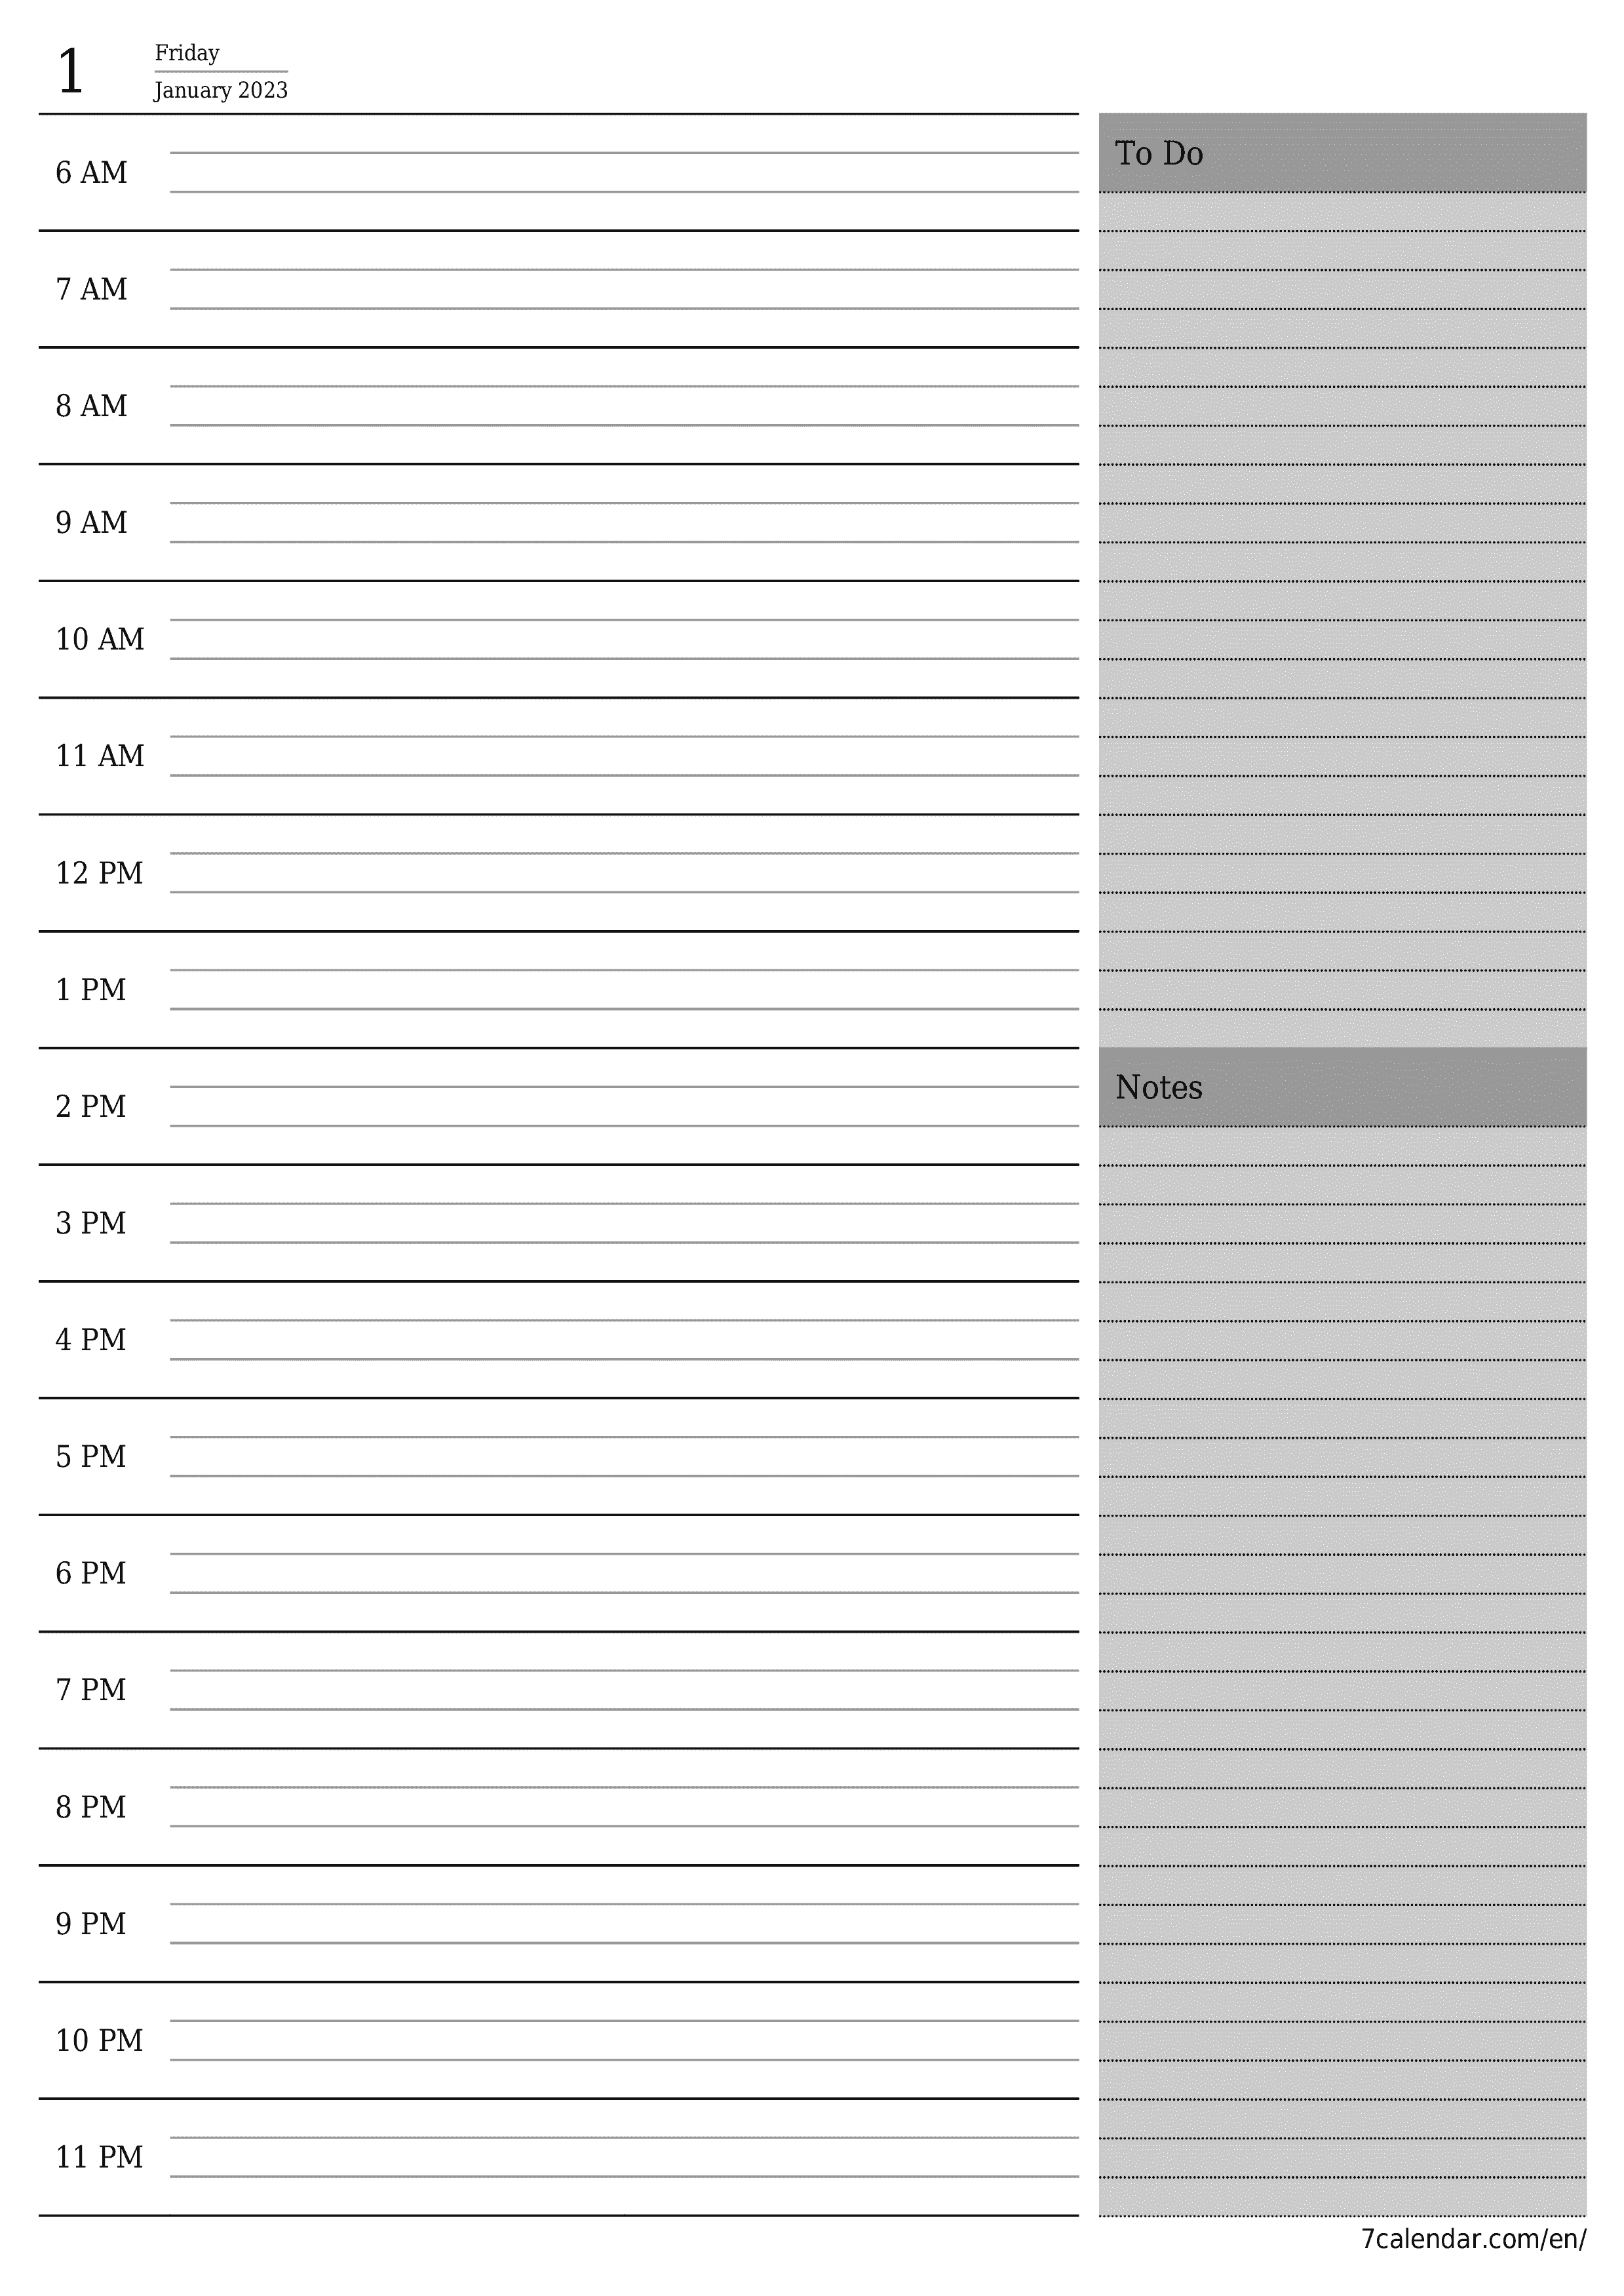 Blank calendar January 2023